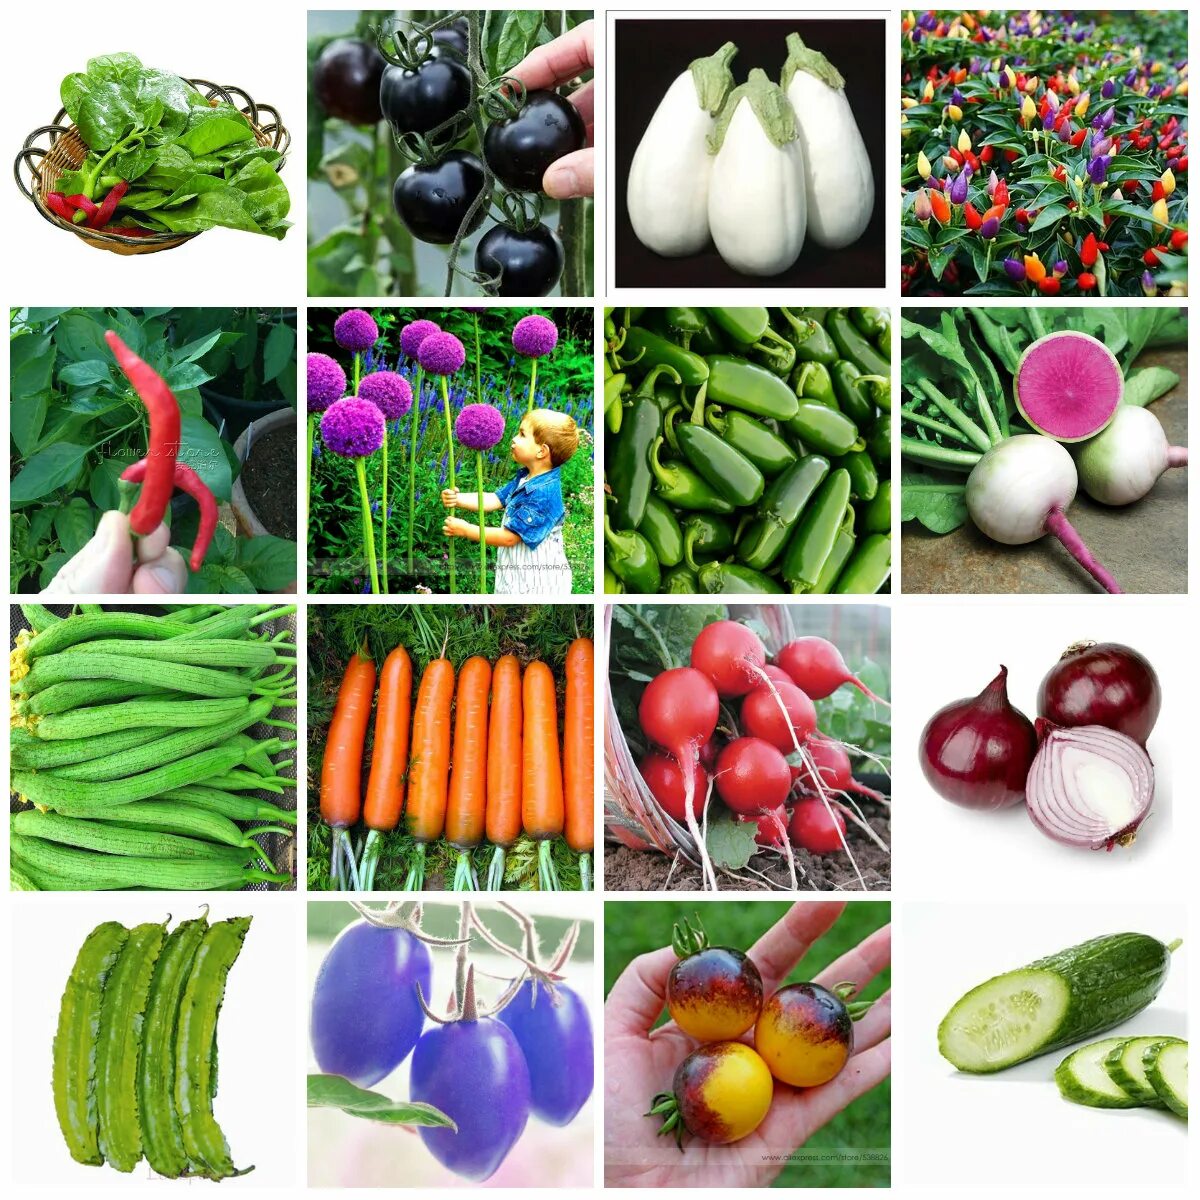 Семена овощей цена